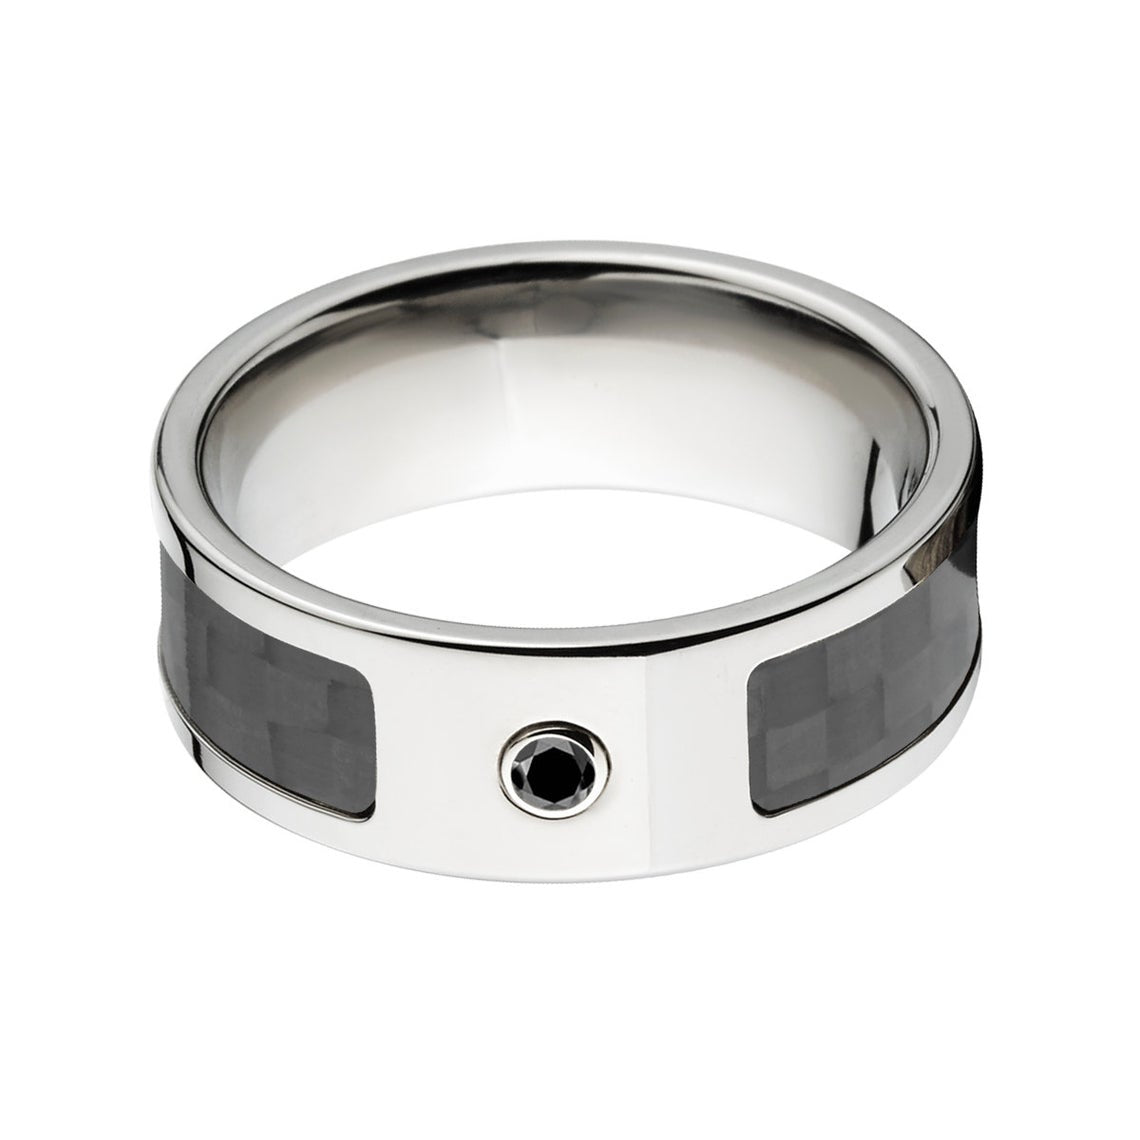 8mm wide titanium ring with a black carbon fiber ring and a bezel set black diamond